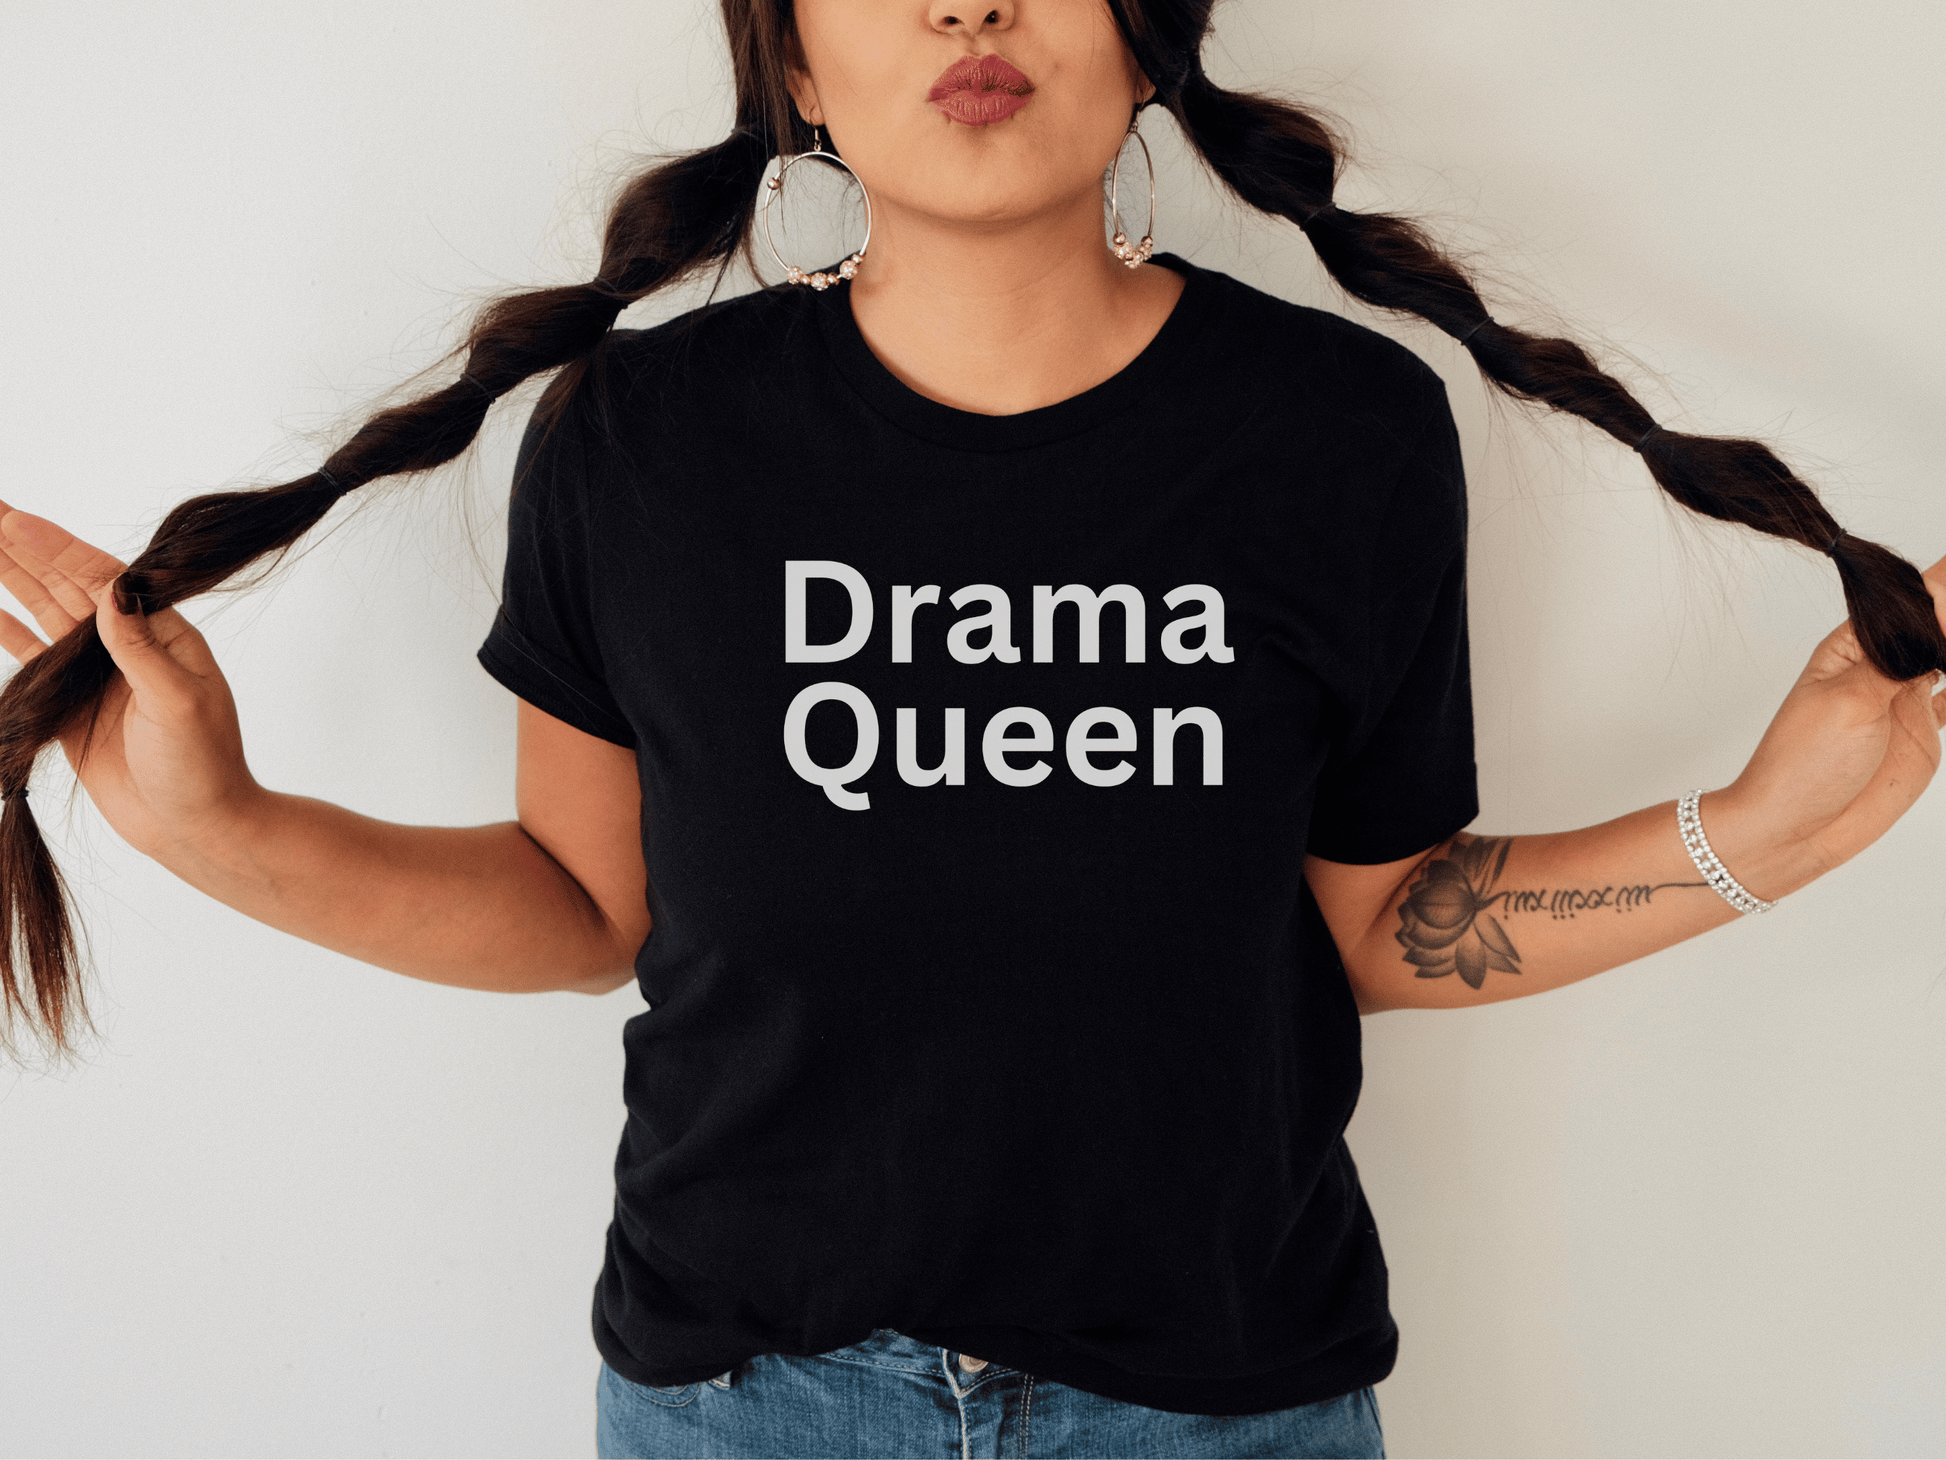 Drama Queen T-Shirt in Black